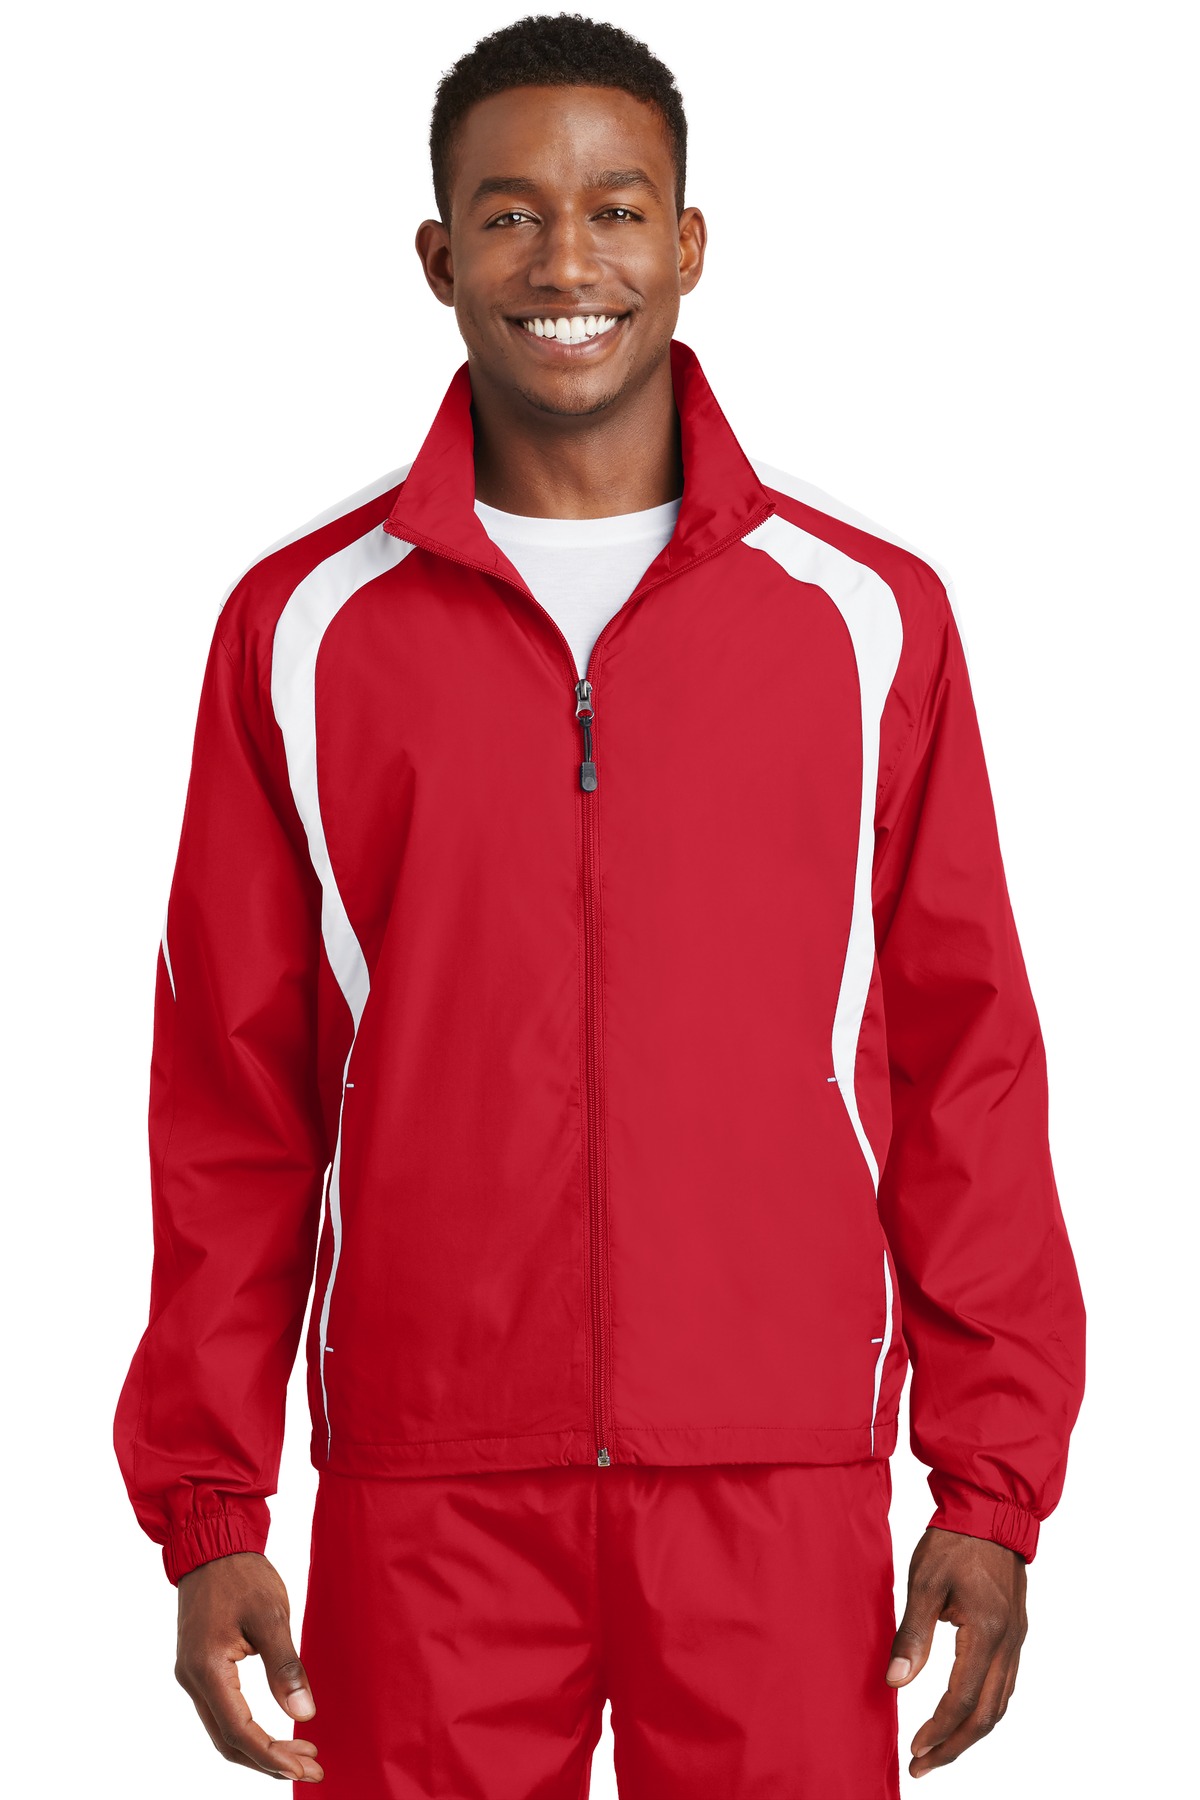 https://images.shirtspace.com/fullsize/mxaQeluJm3jBcv4l%2FIA6sw%3D%3D/71119/9864-sport-tek-jst60-colorblock-raglan-jacket-front-true-red-white.jpg